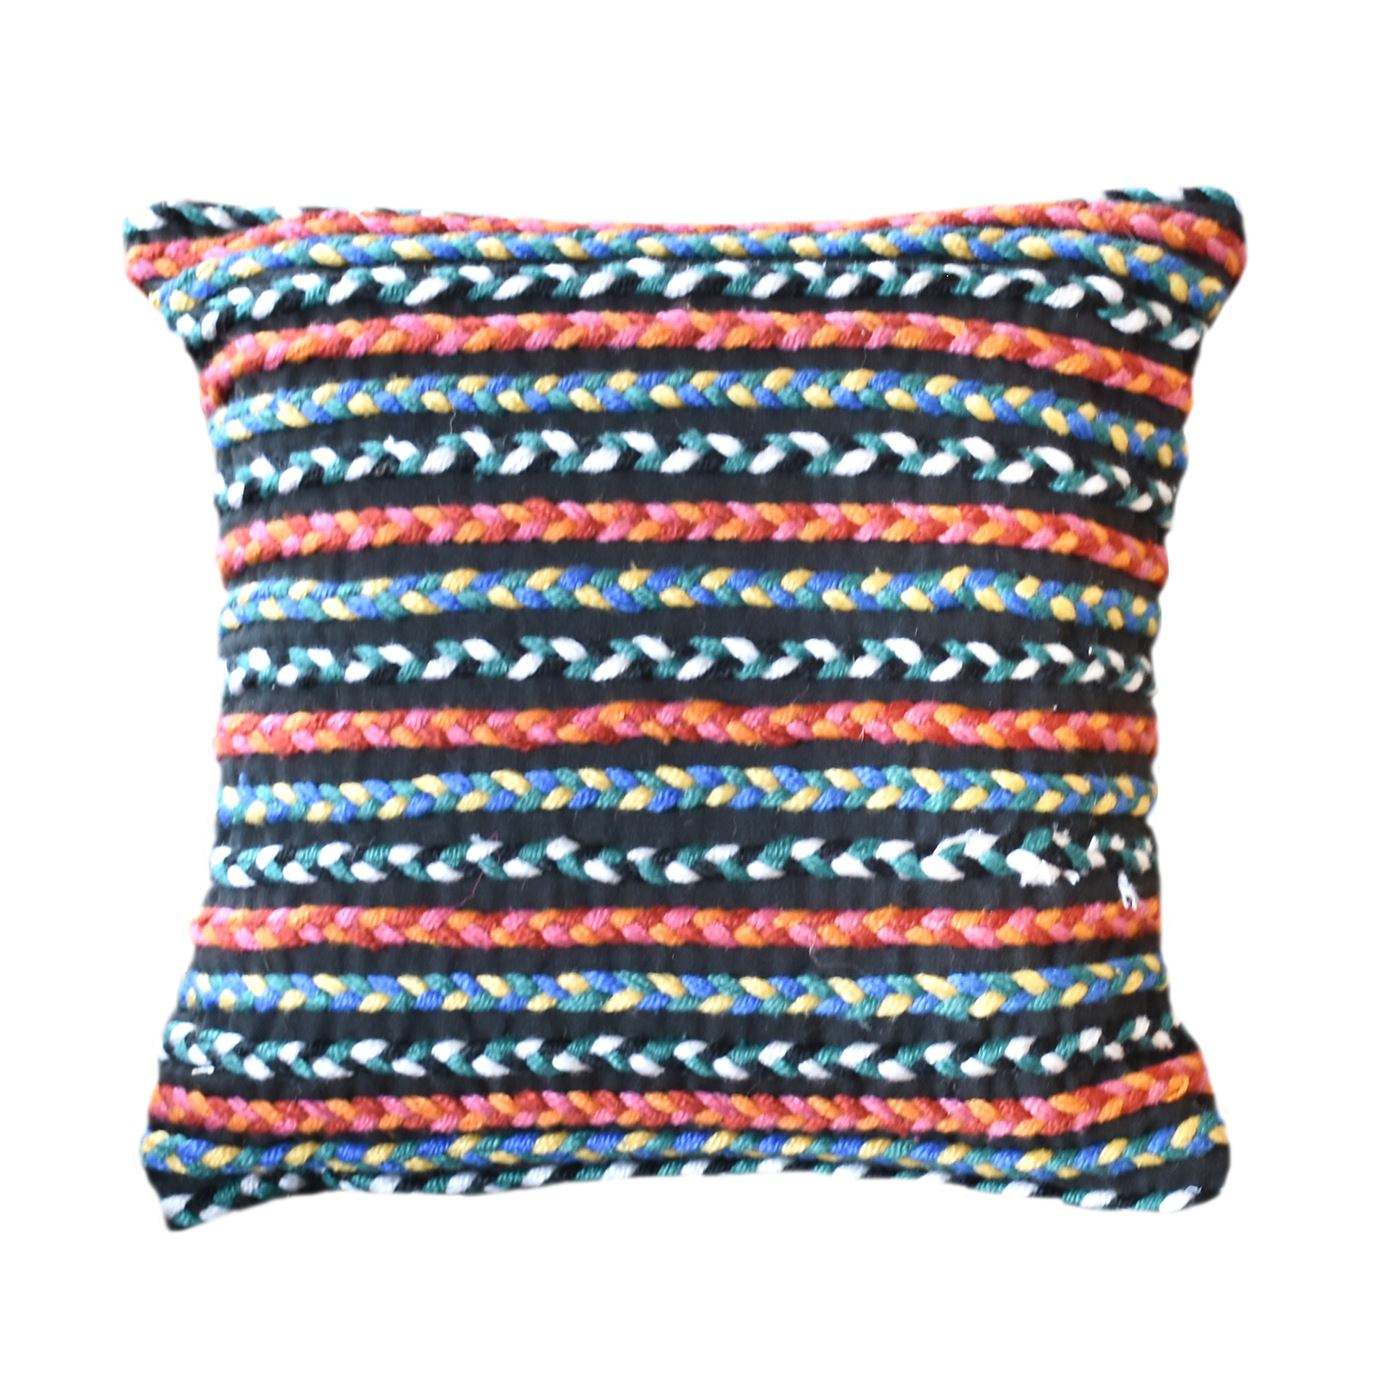 Bridin Pillow, Pet, Charcoal, Multi, Hm Stitching, Flat Weave